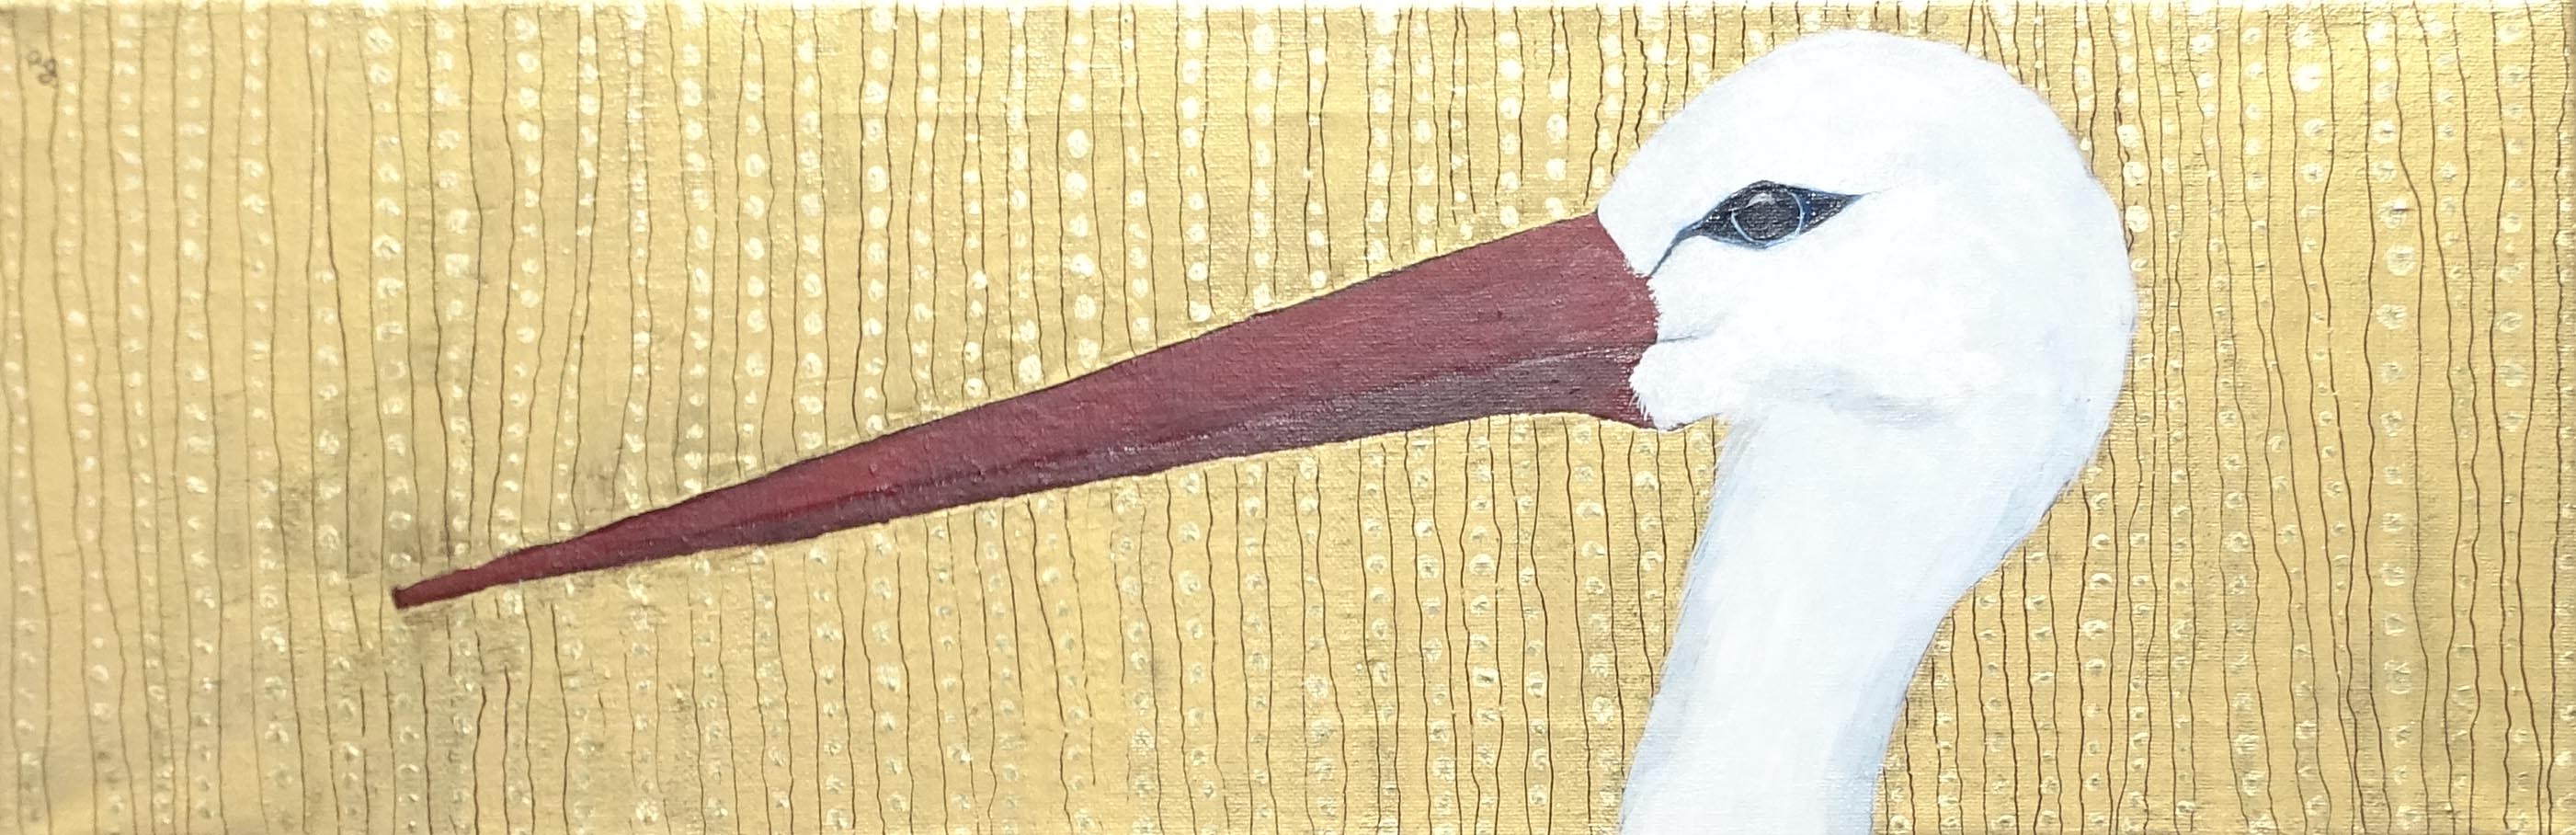 patrick gourgouillat - "Stork [Animals]" - 2015